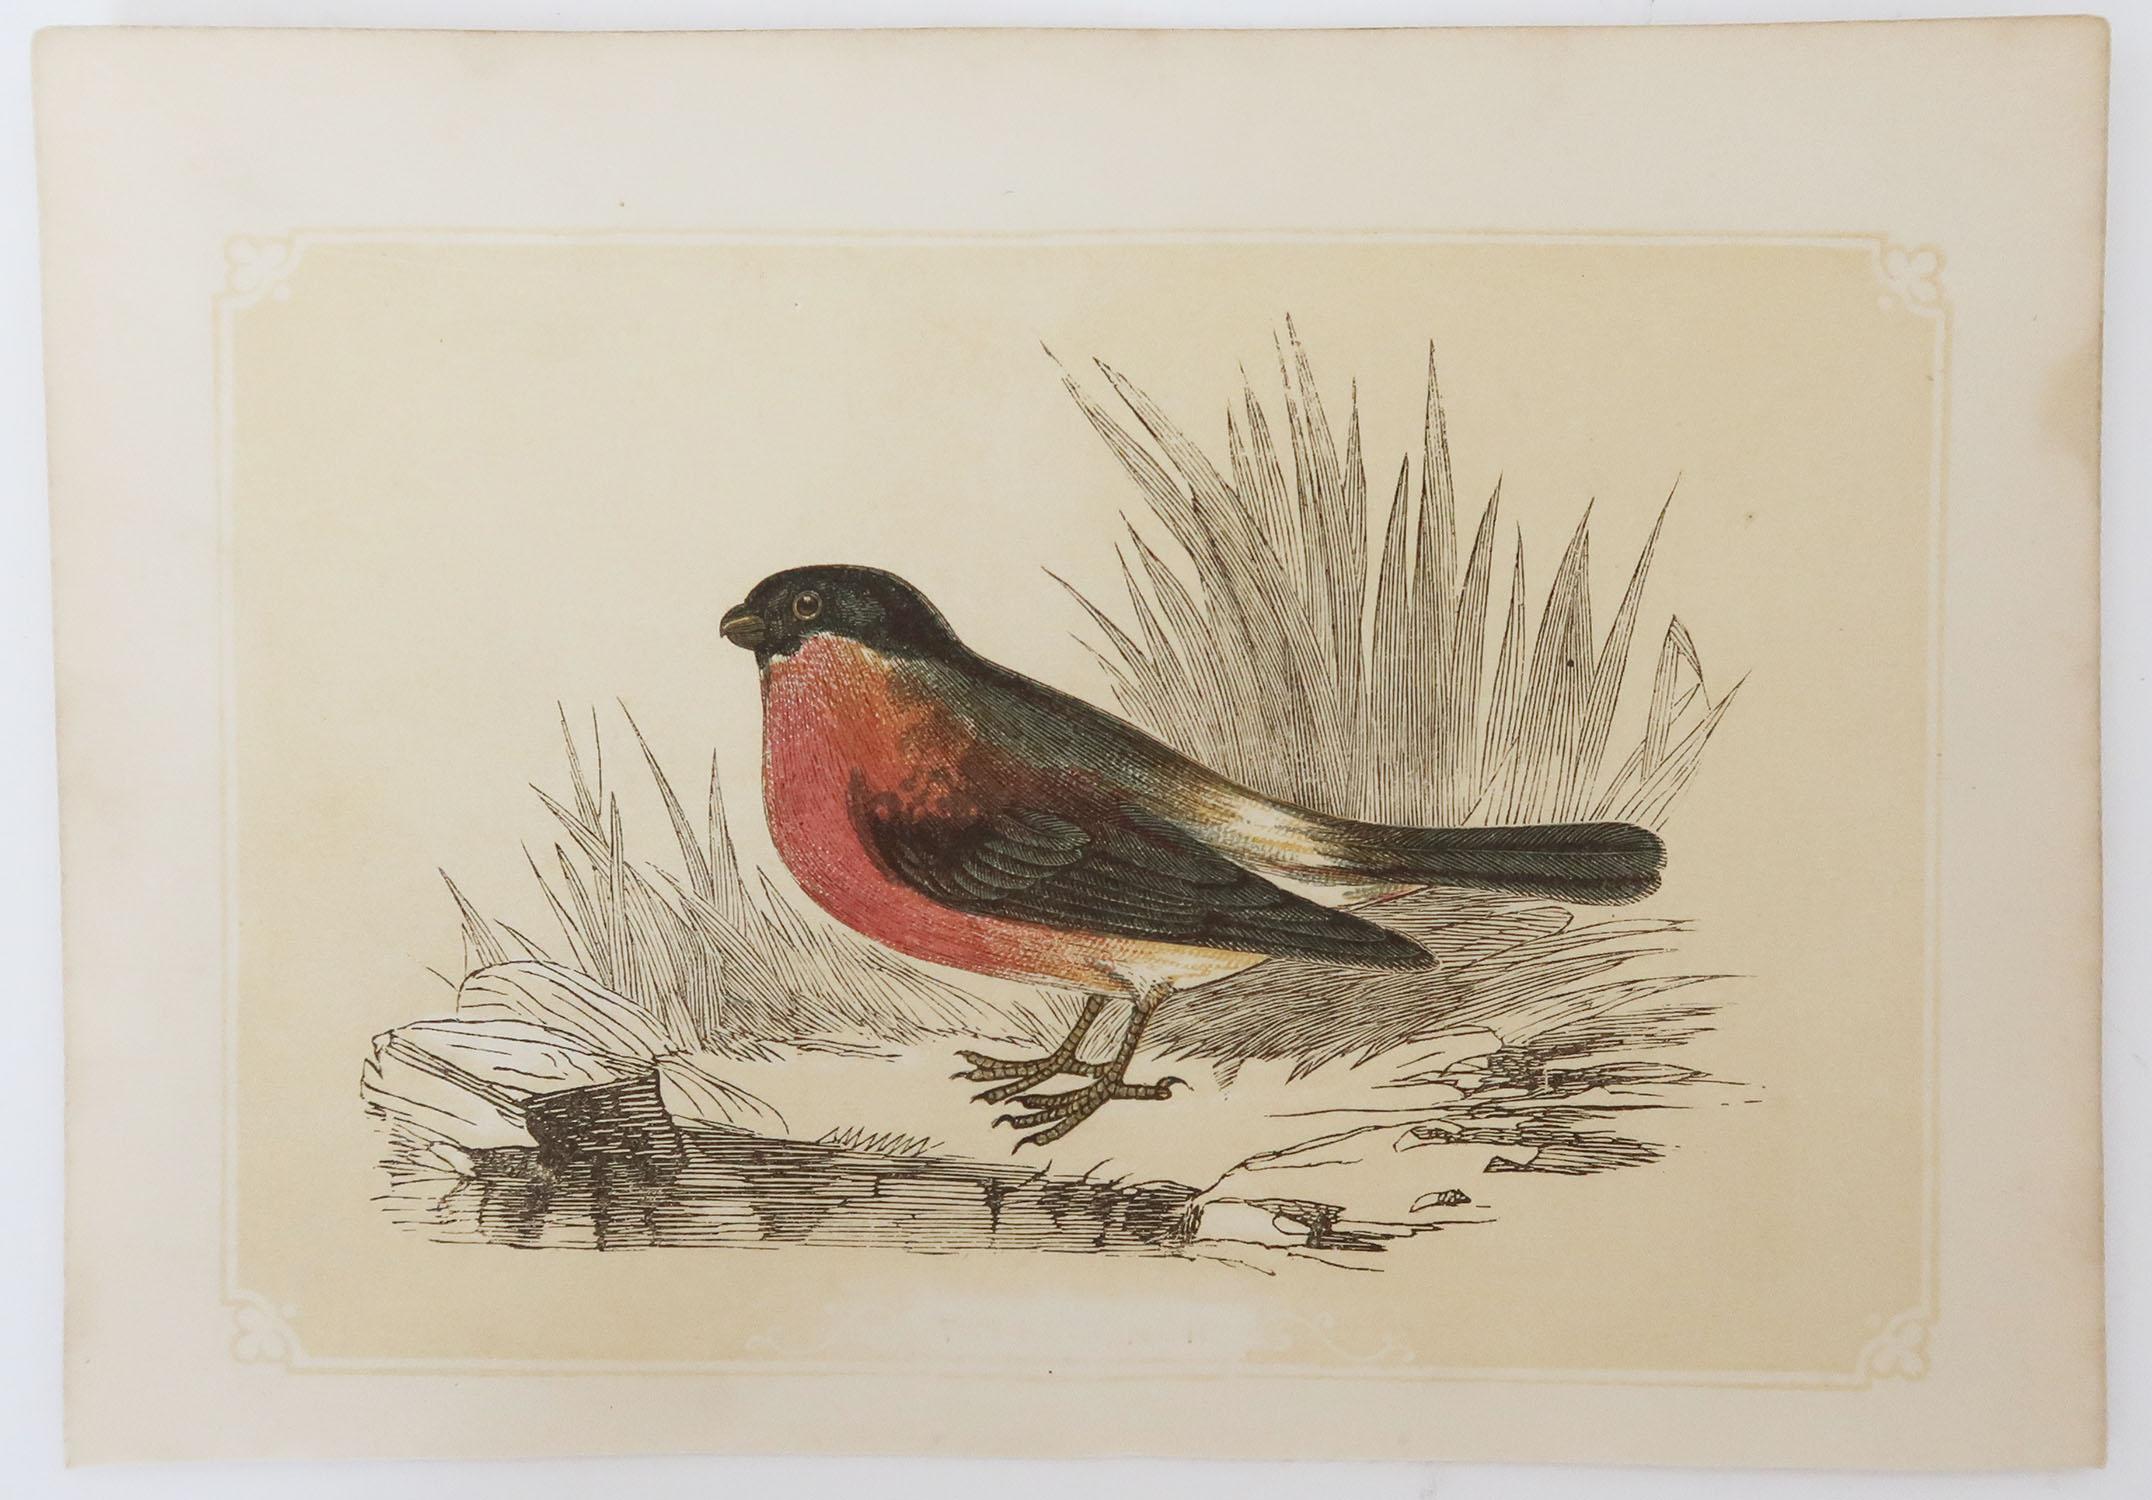 Folk Art Original Antique Bird Print, the Bullfinch, Tallis circa 1850